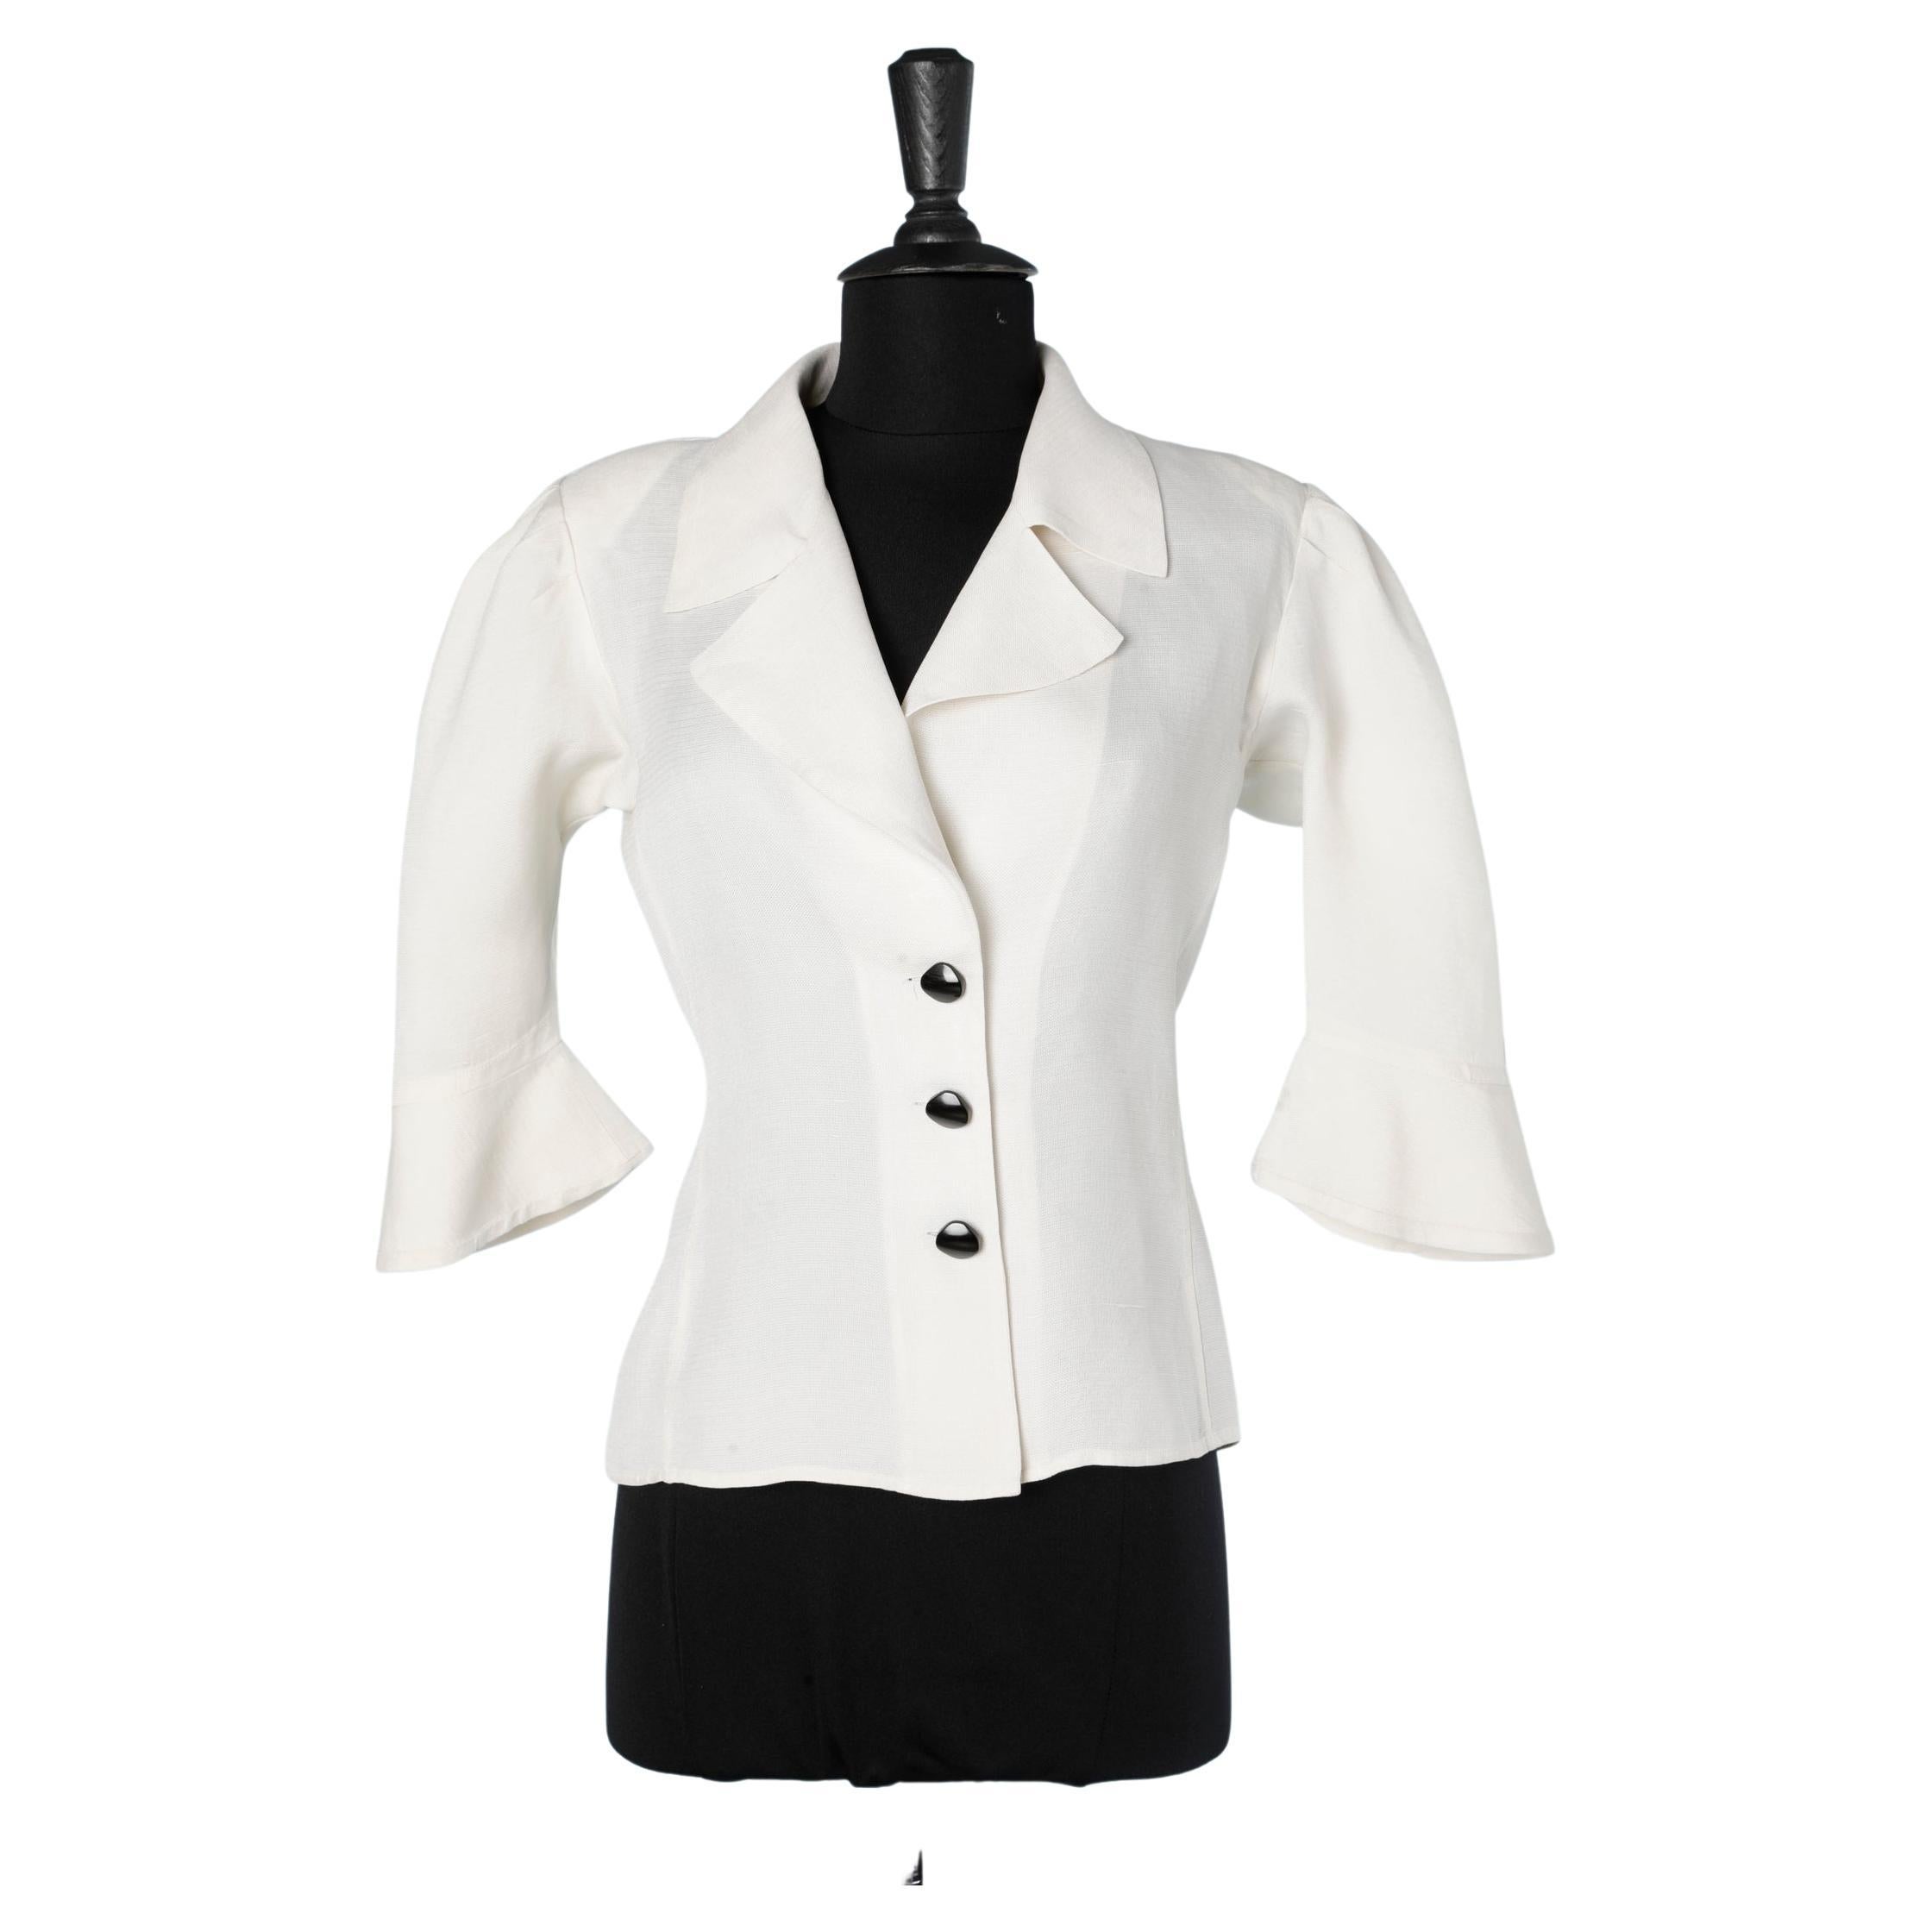 White silk Gazar shirt with black buttons Saint Laurent Rive Gauche 